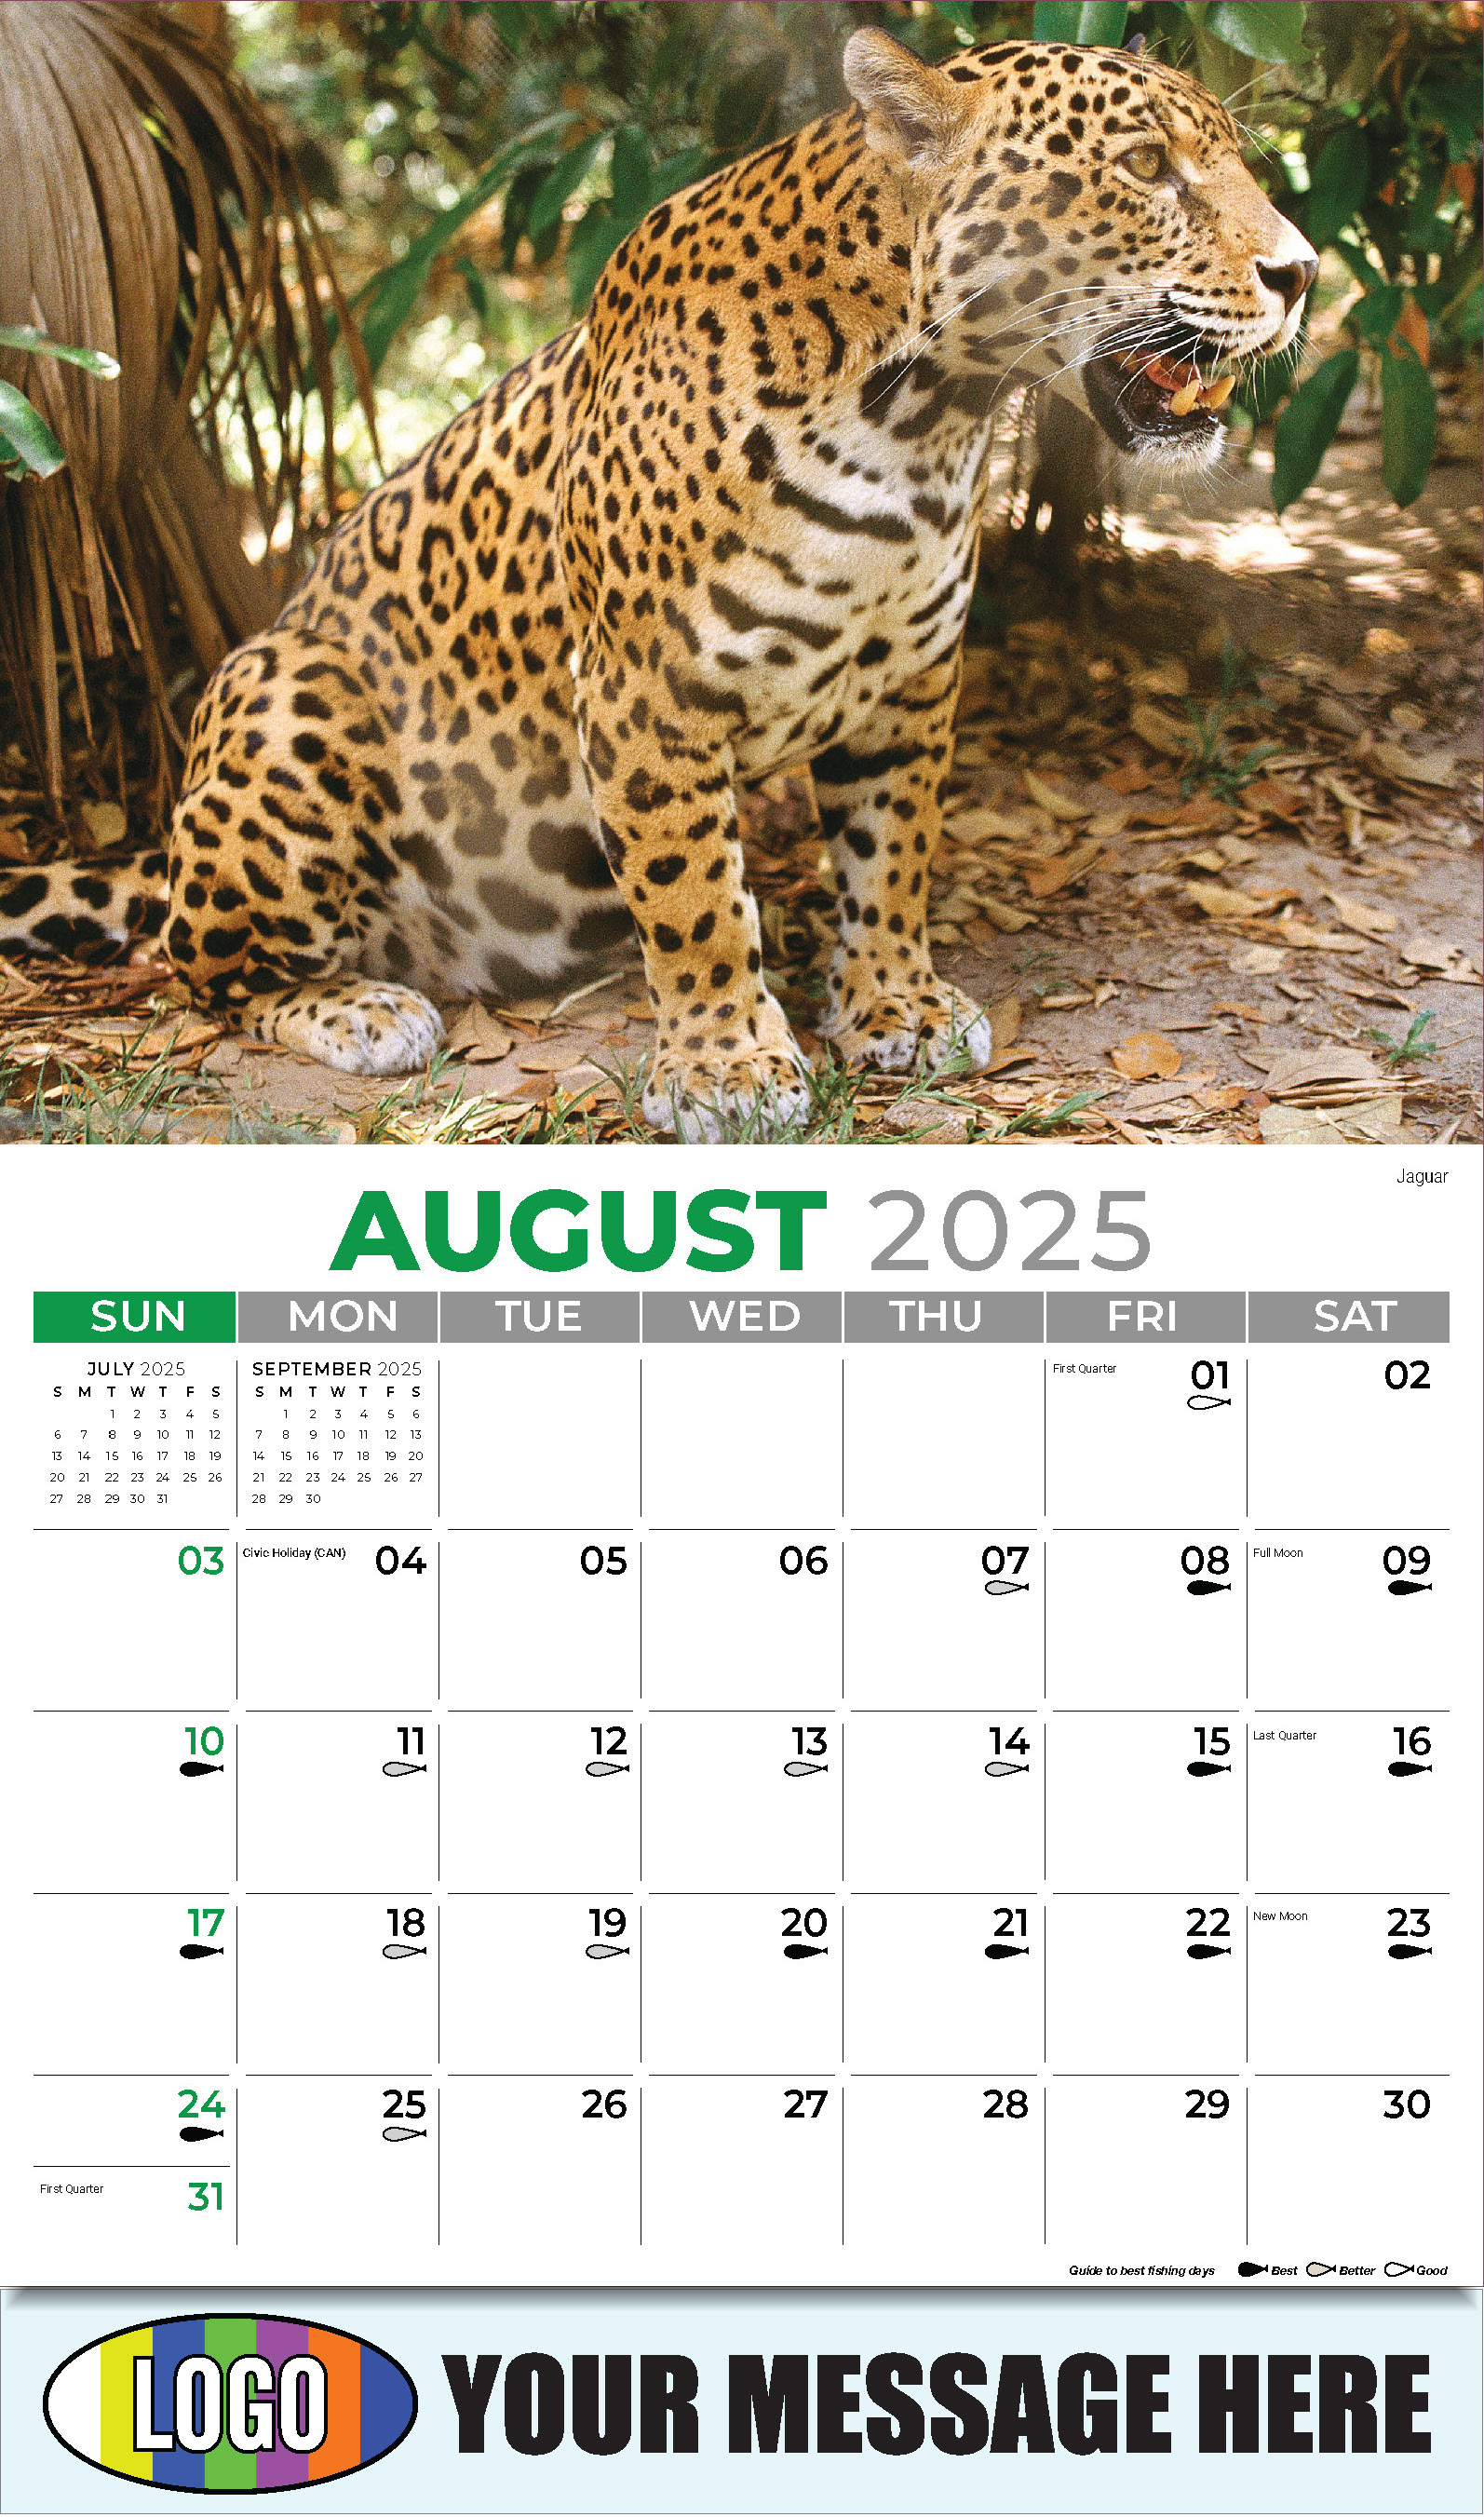 North American Wildlife 2025 Business Promo Wall Calendar - August